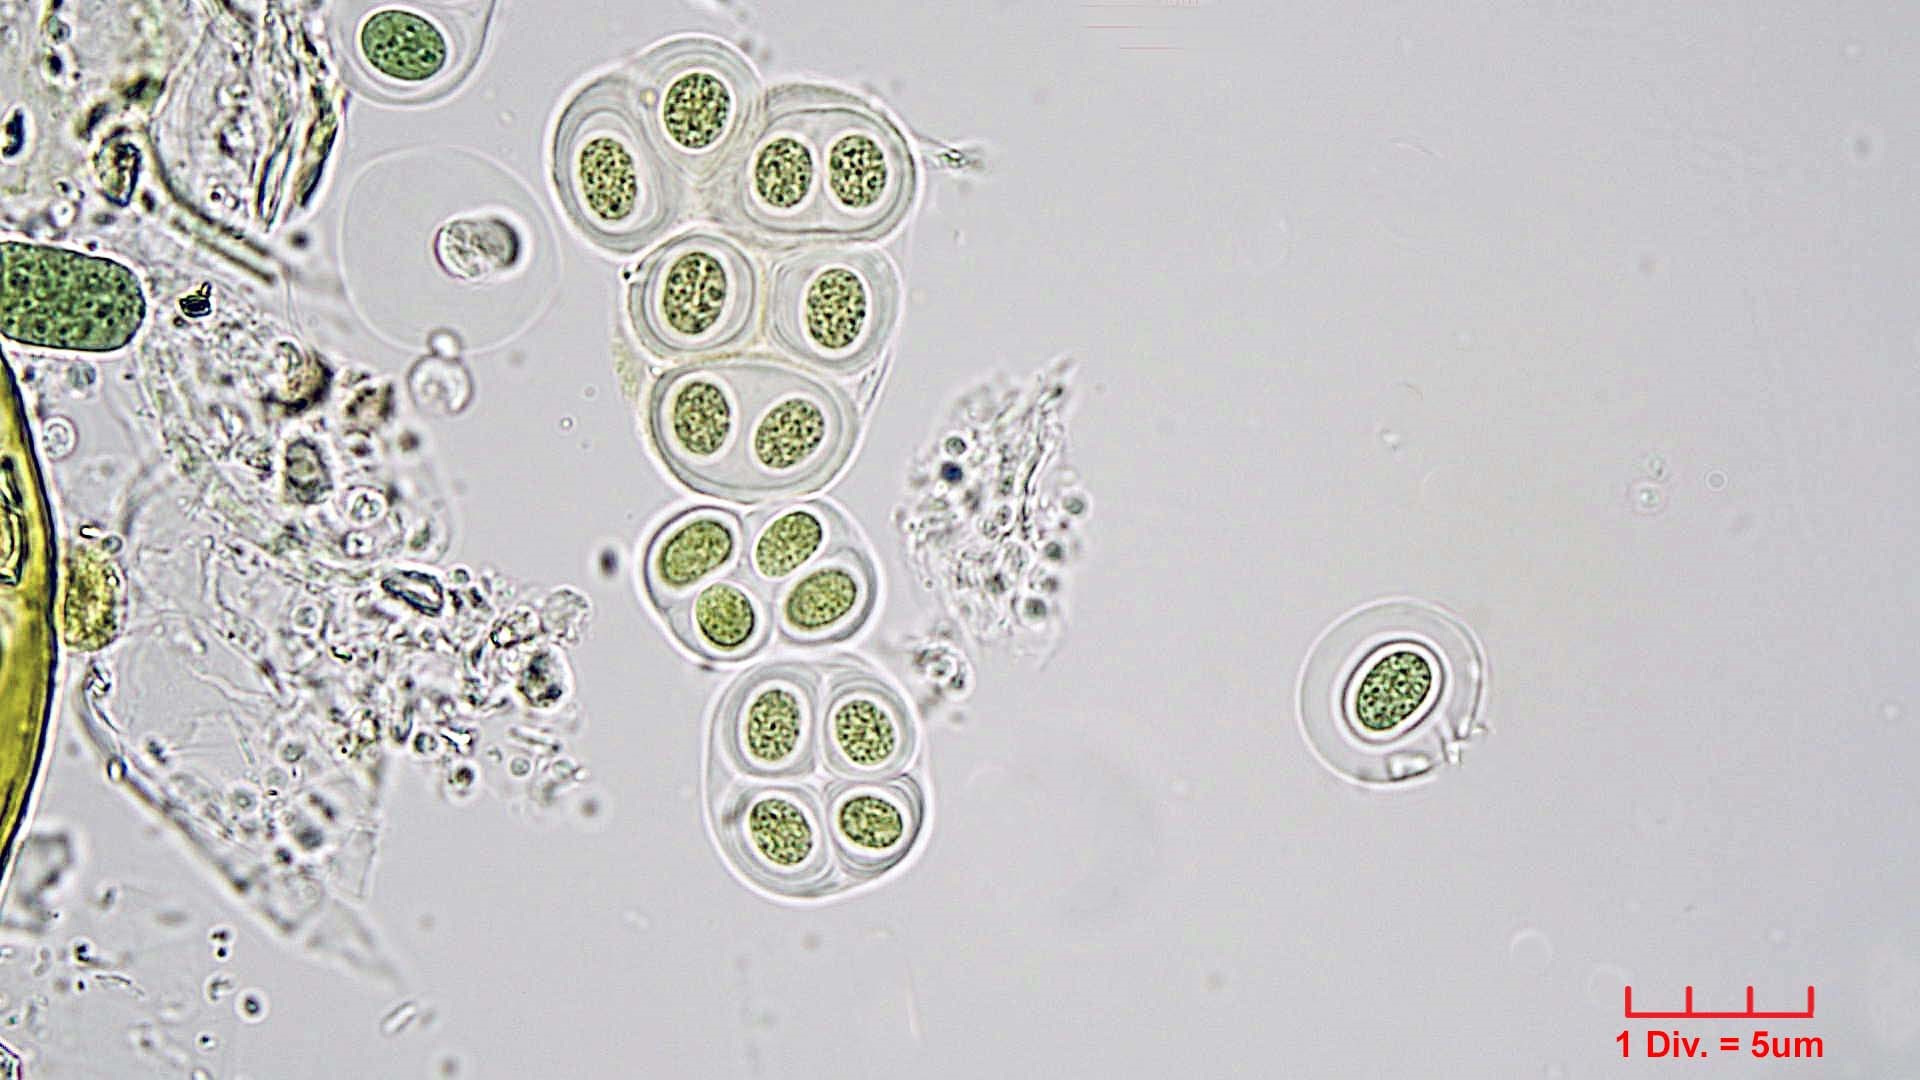 ././Cyanobacteria/Chroococcales/Aphanothecaceae/Gloeothece/rupestris/gloeothece-rupestris-17.jpg